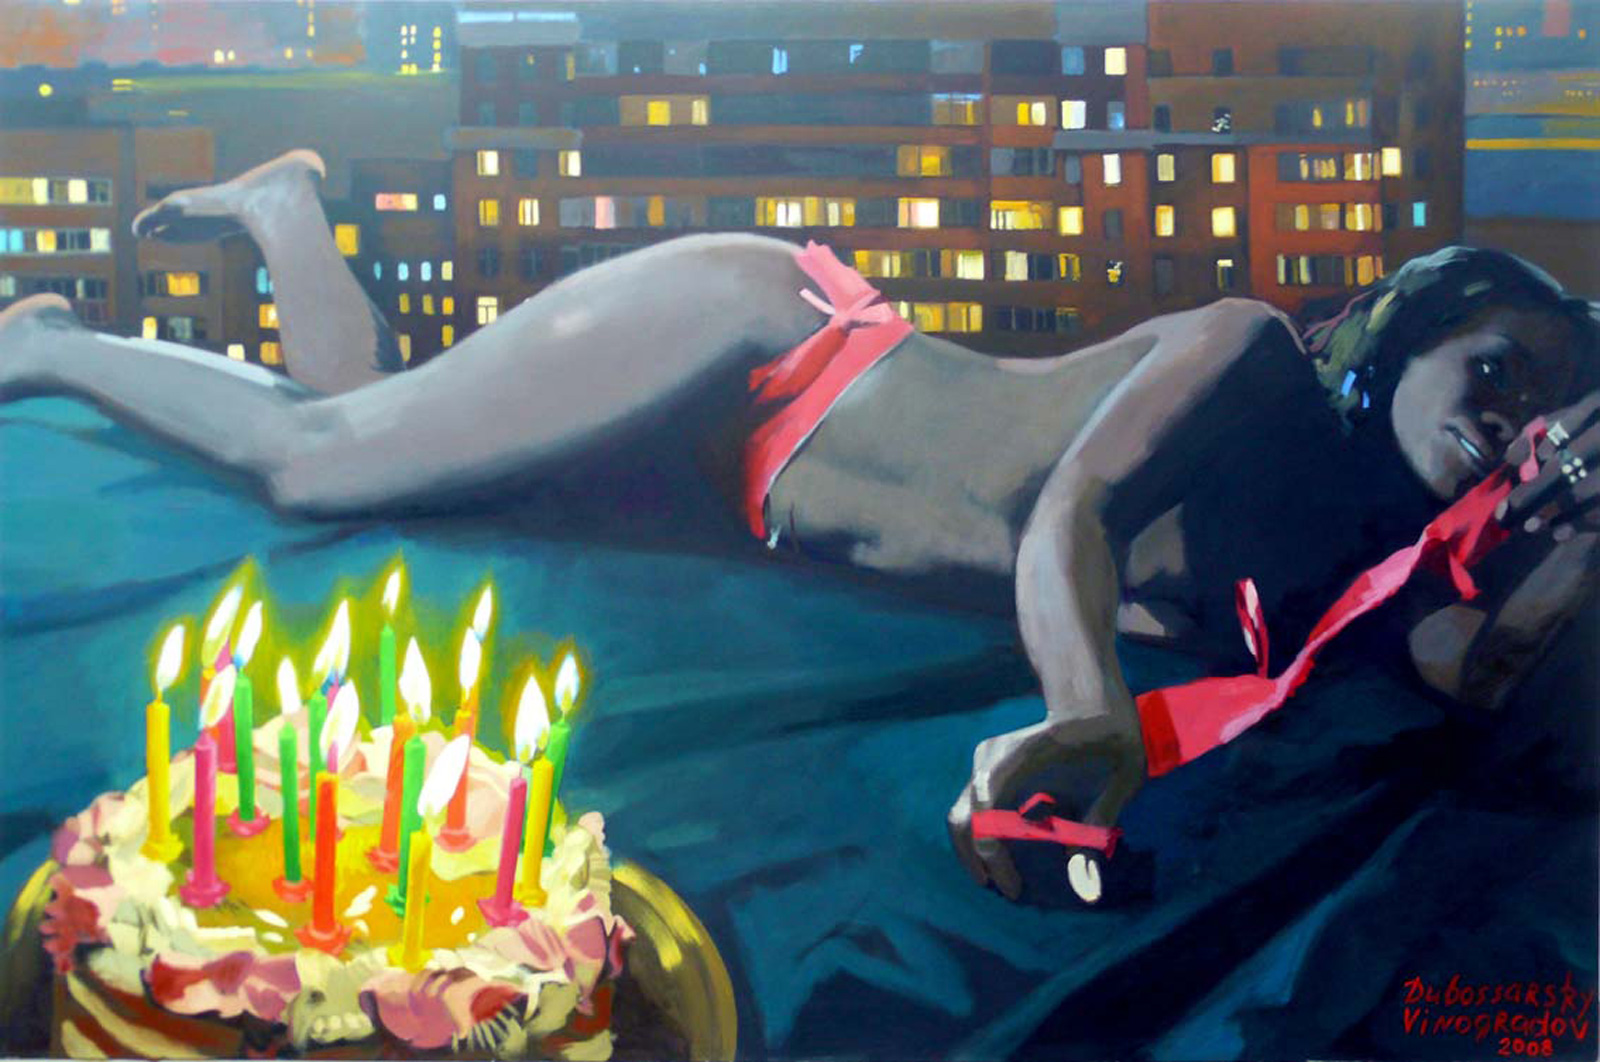 Dubossarsky & Vinogradov
Happy Birthday, 2008
oil on canvas
195 x 295 cm
77 x 116 ins. Vladimir Dubossarsky and Alexander Vinogradov